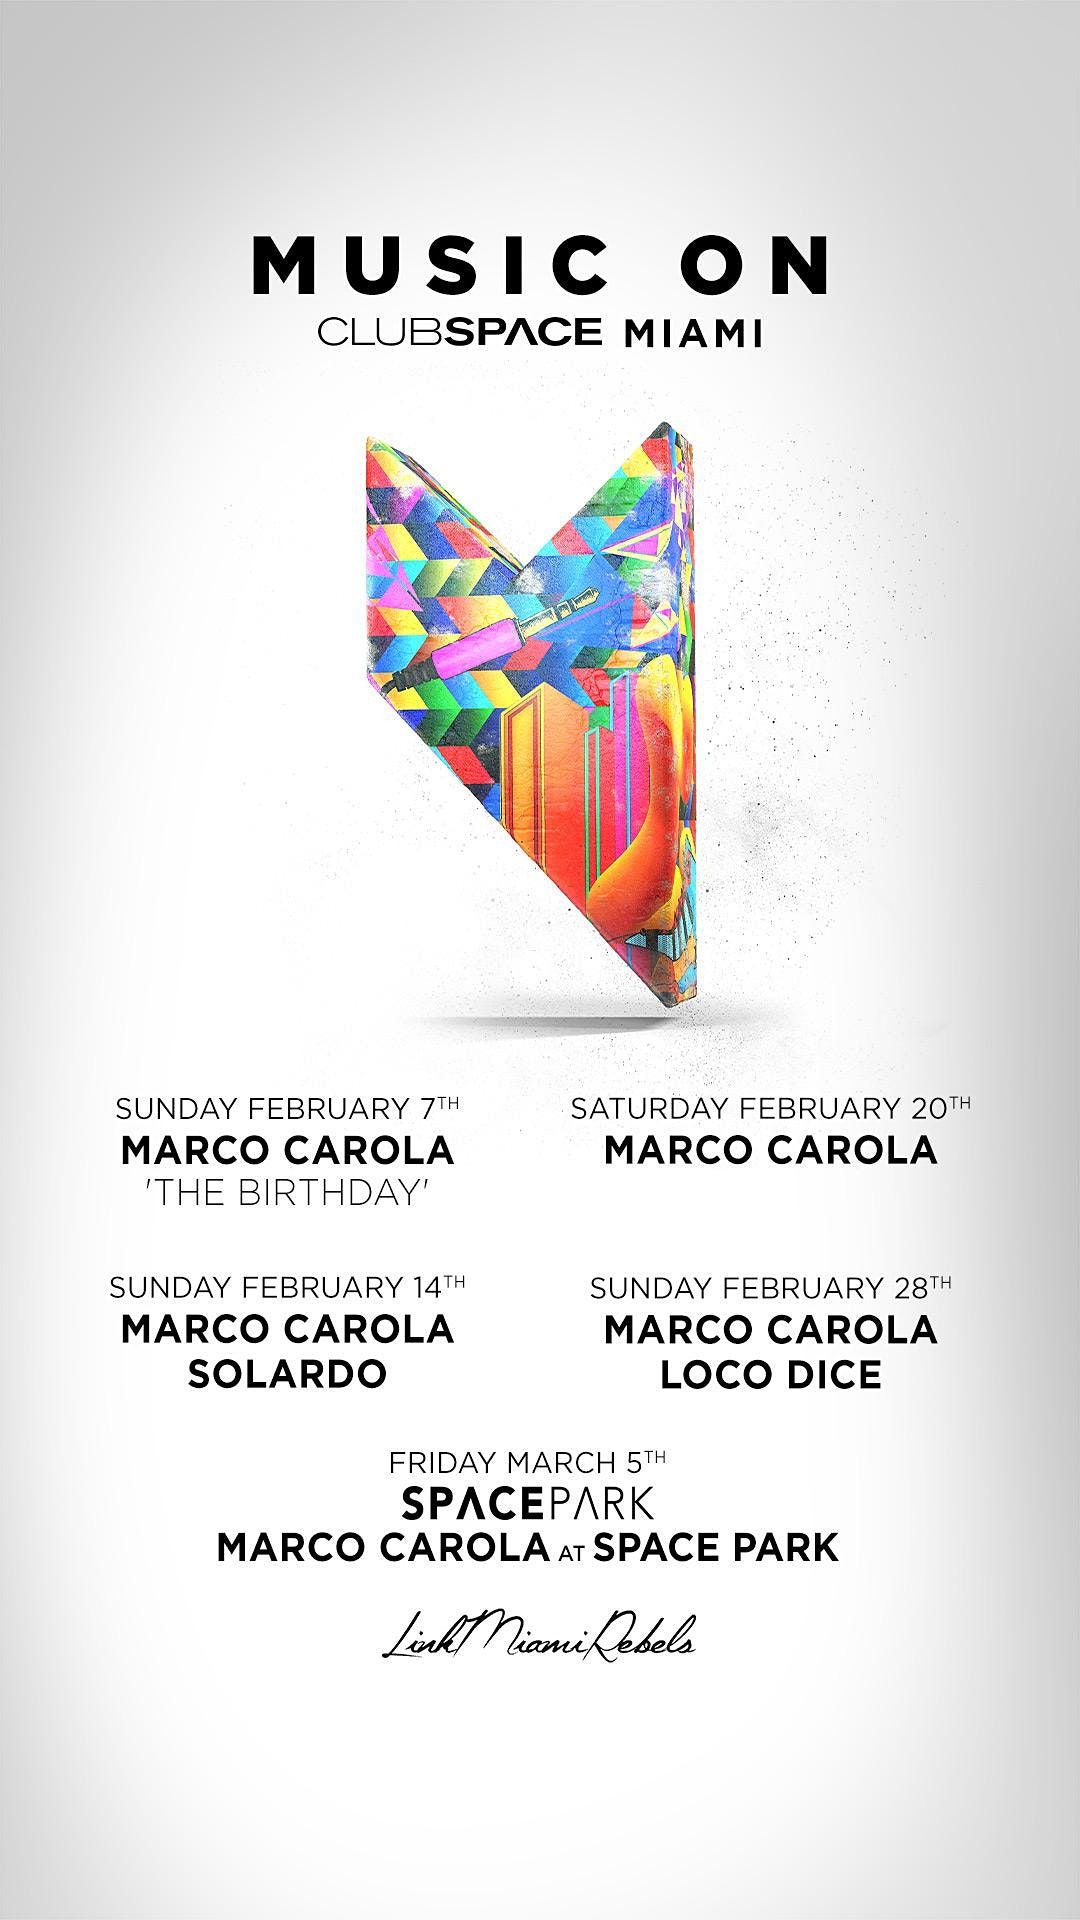 Marco Carola & Loco Dice @ Club Space Miami